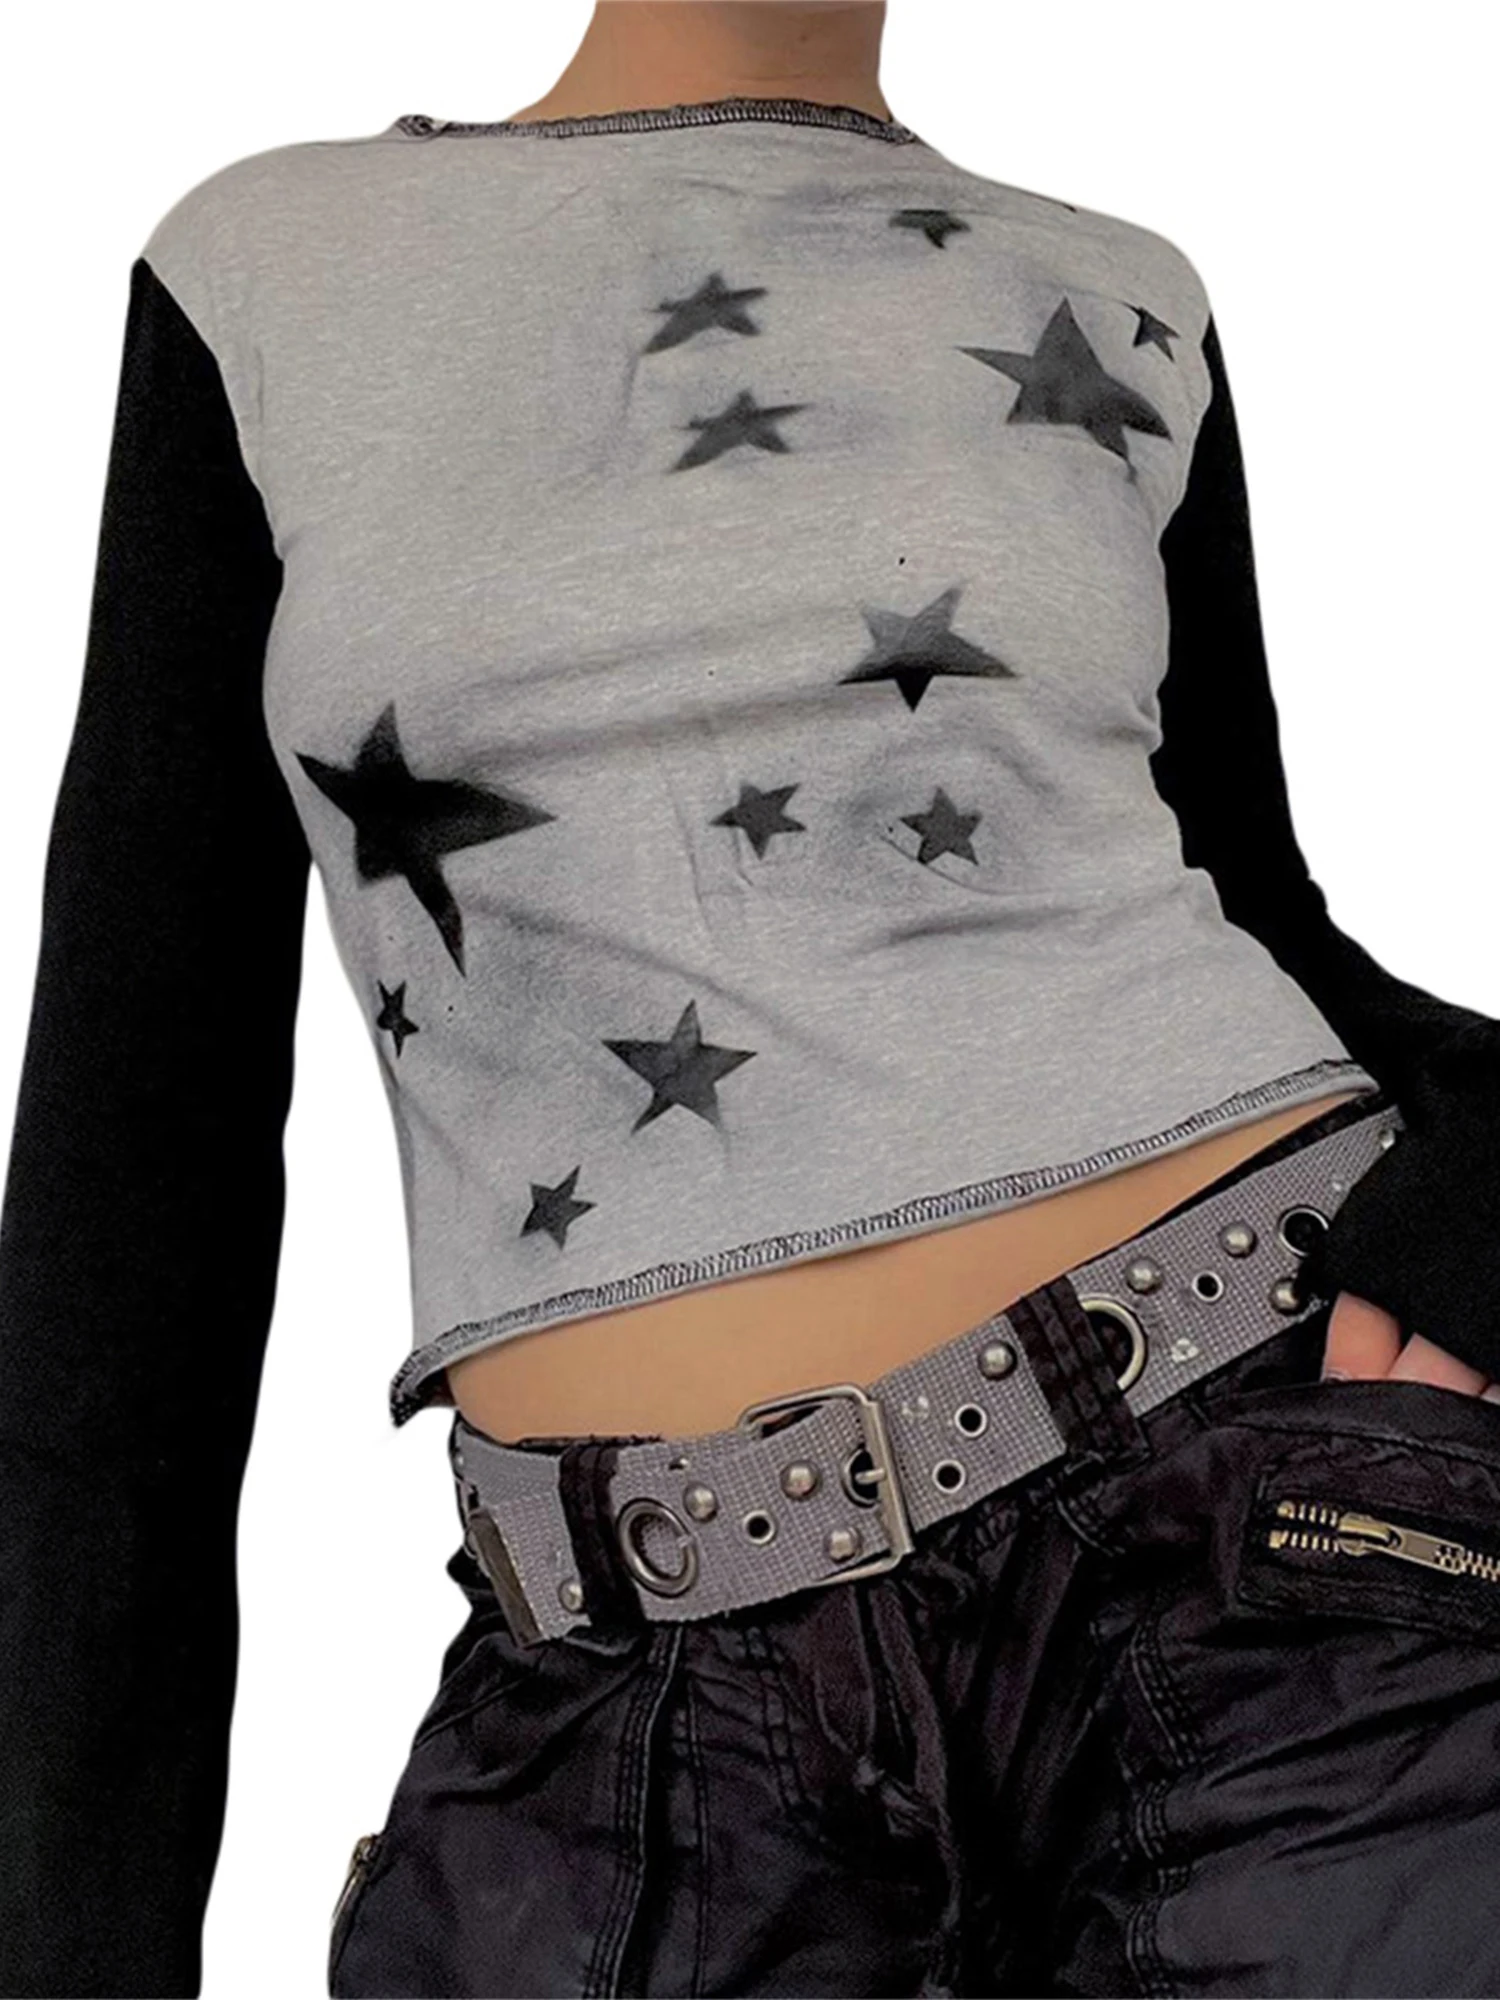 

Women Retro Moon Print Blouse Y2K Oversized Sleeveless Vintage Grunge Tank Tops 2000s Teen Girls Aesthetic Graphic Tee Shirt